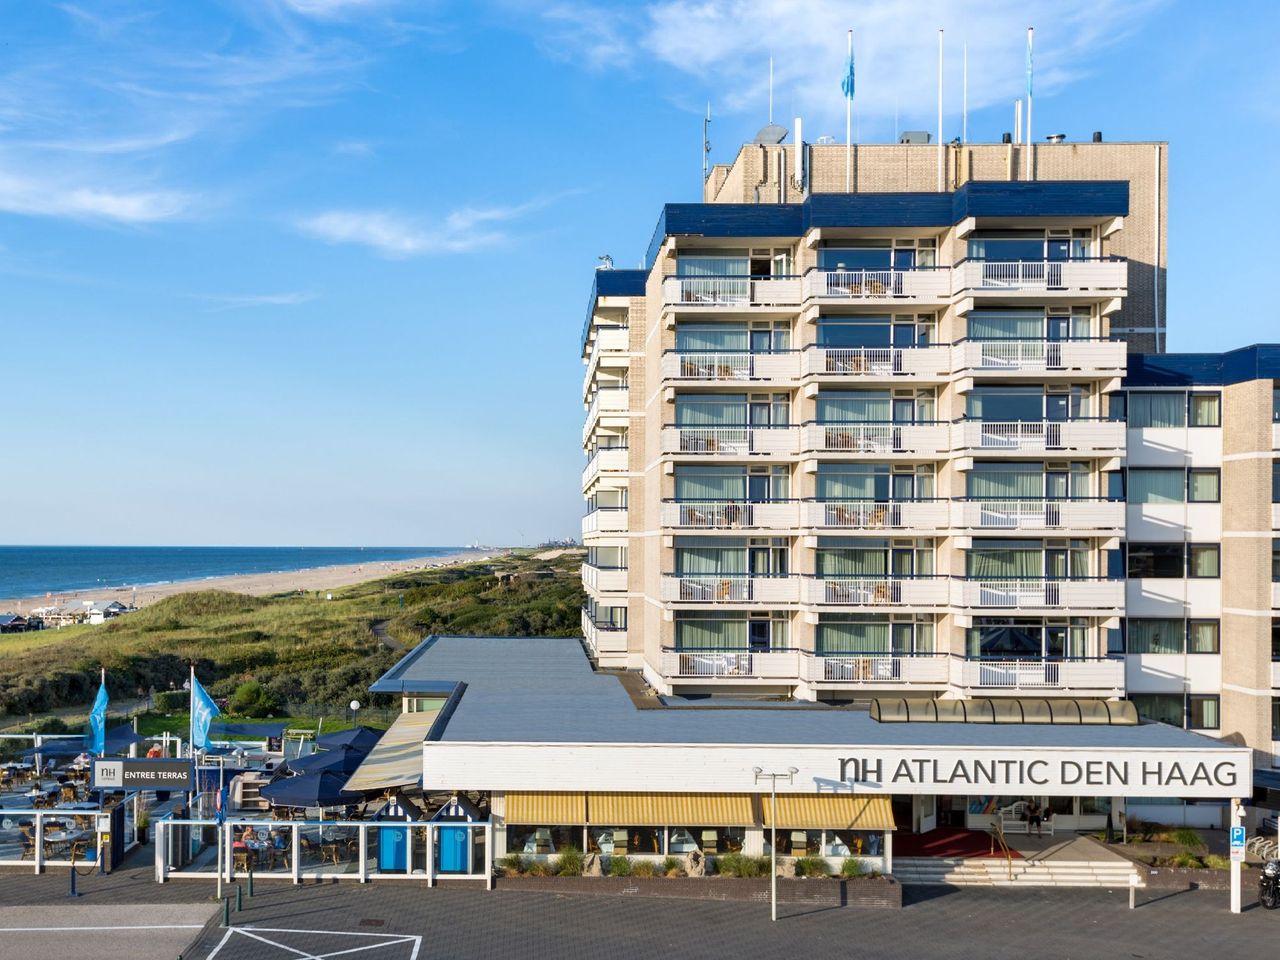 5 Tage im Hotel NH Atlantic Den Haag 